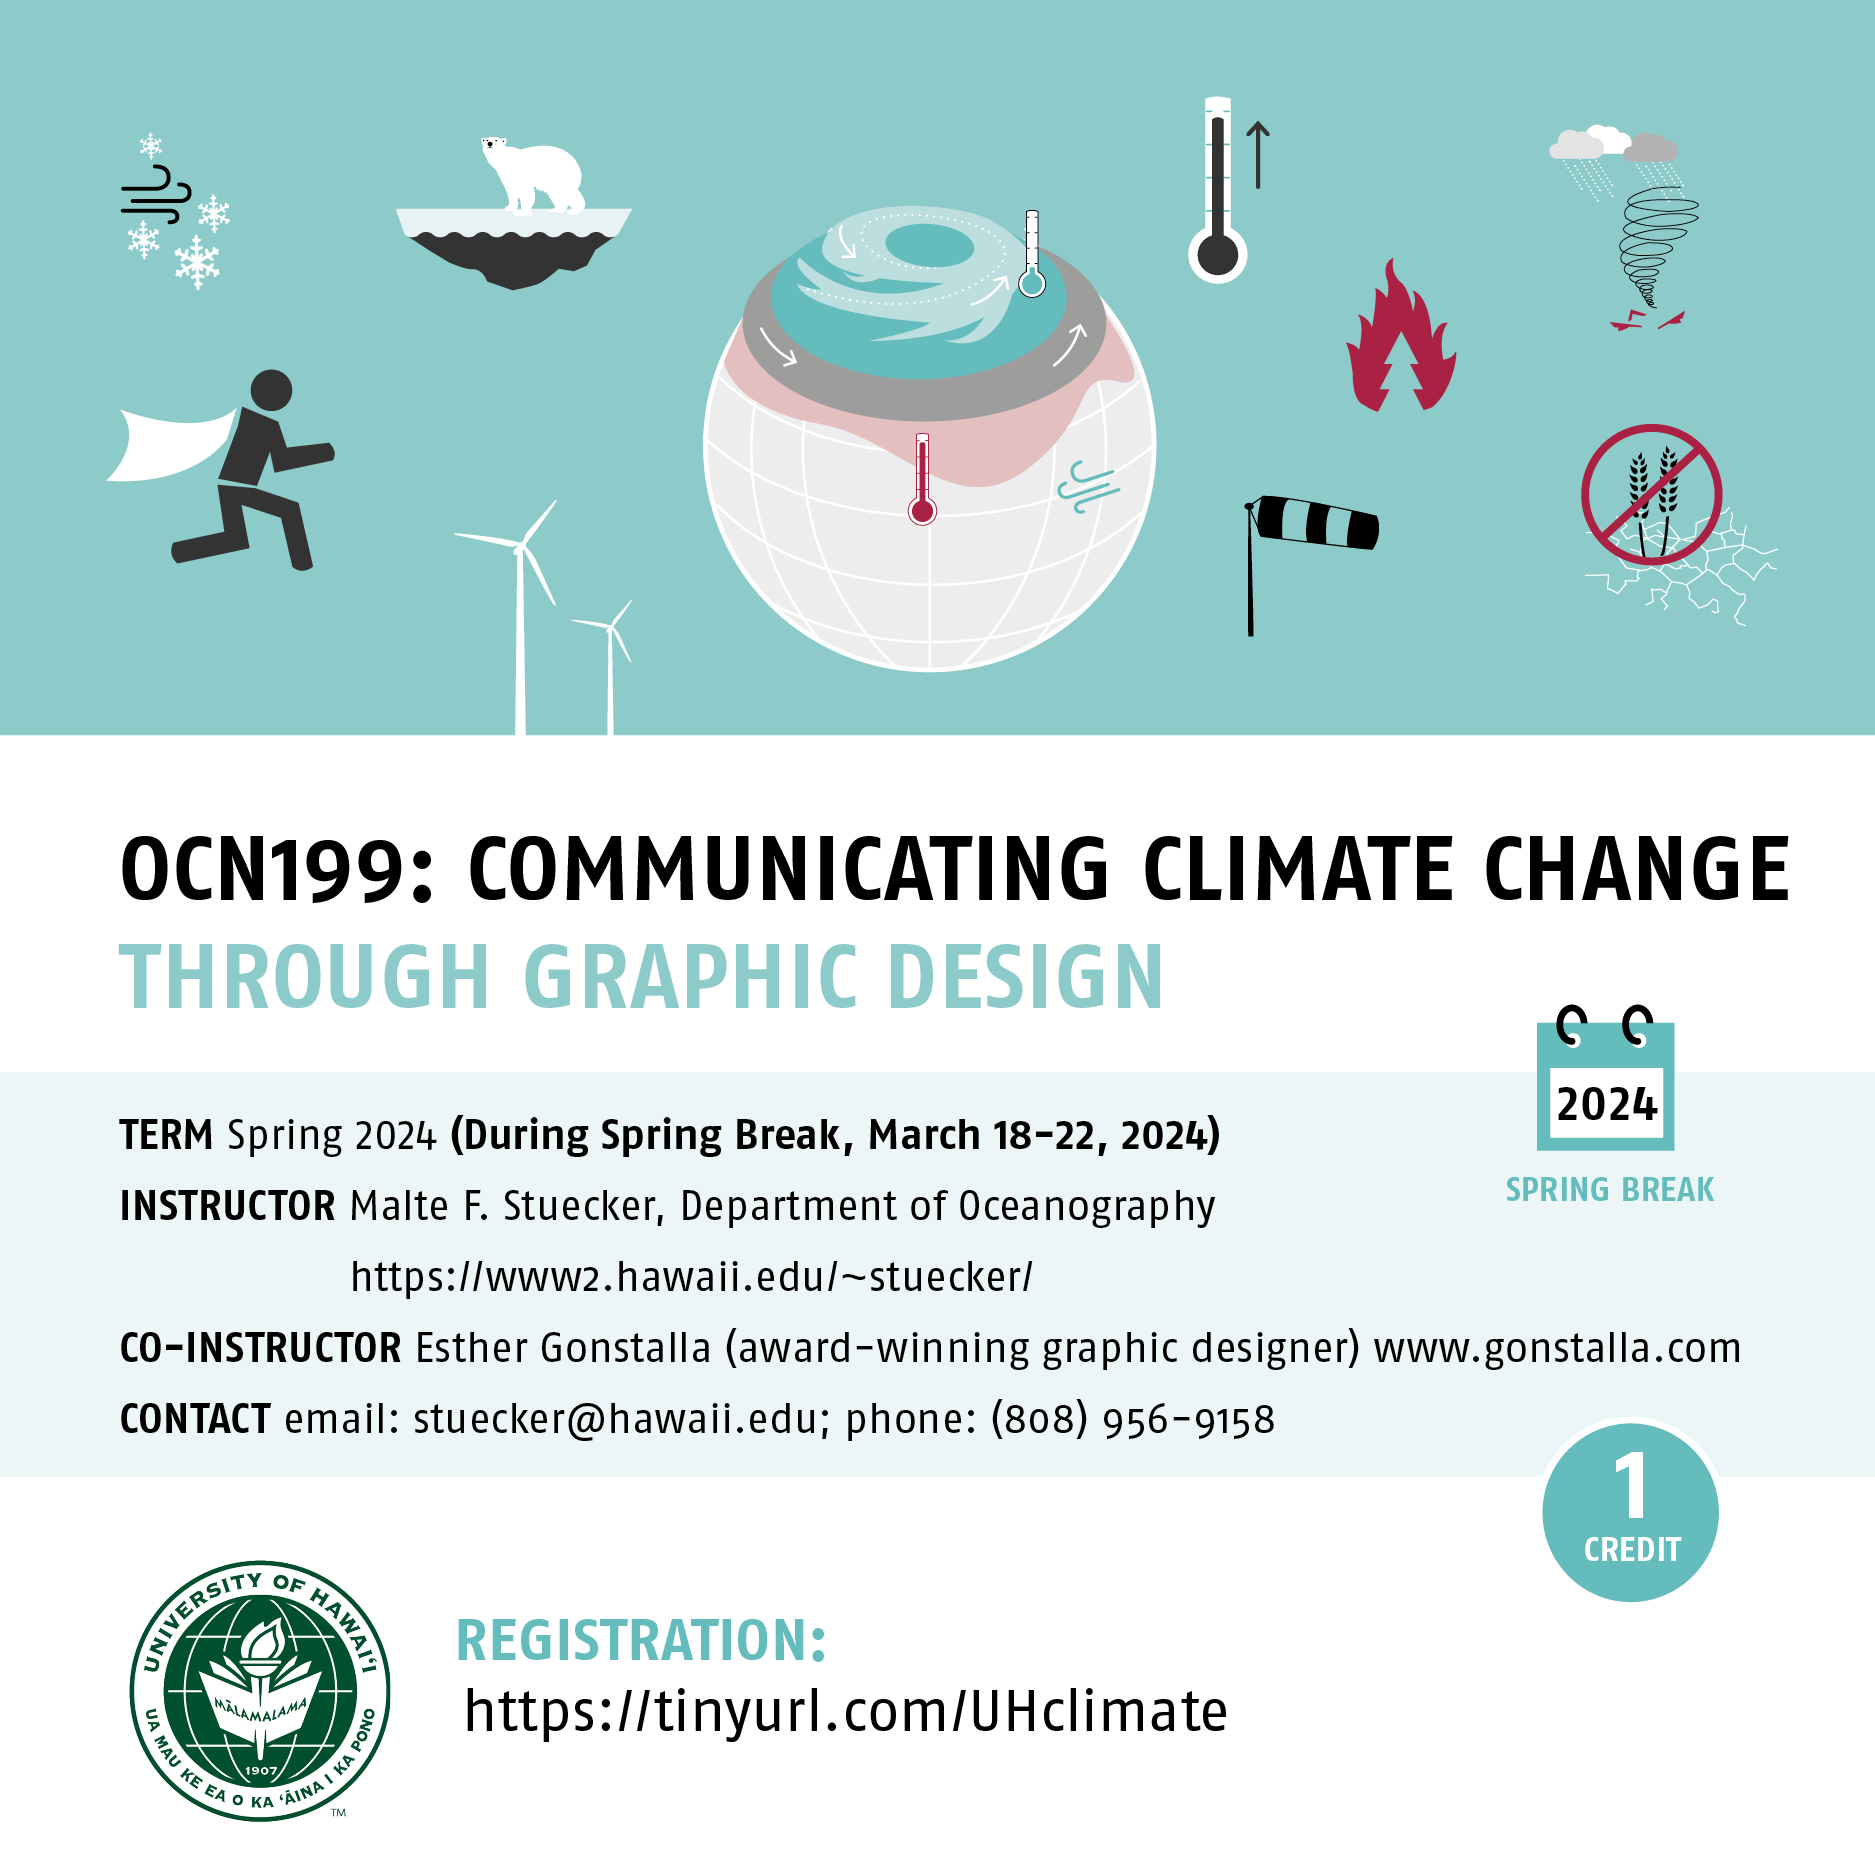 OCN 199: Communicating Climate Change Through Graphic Design flyer